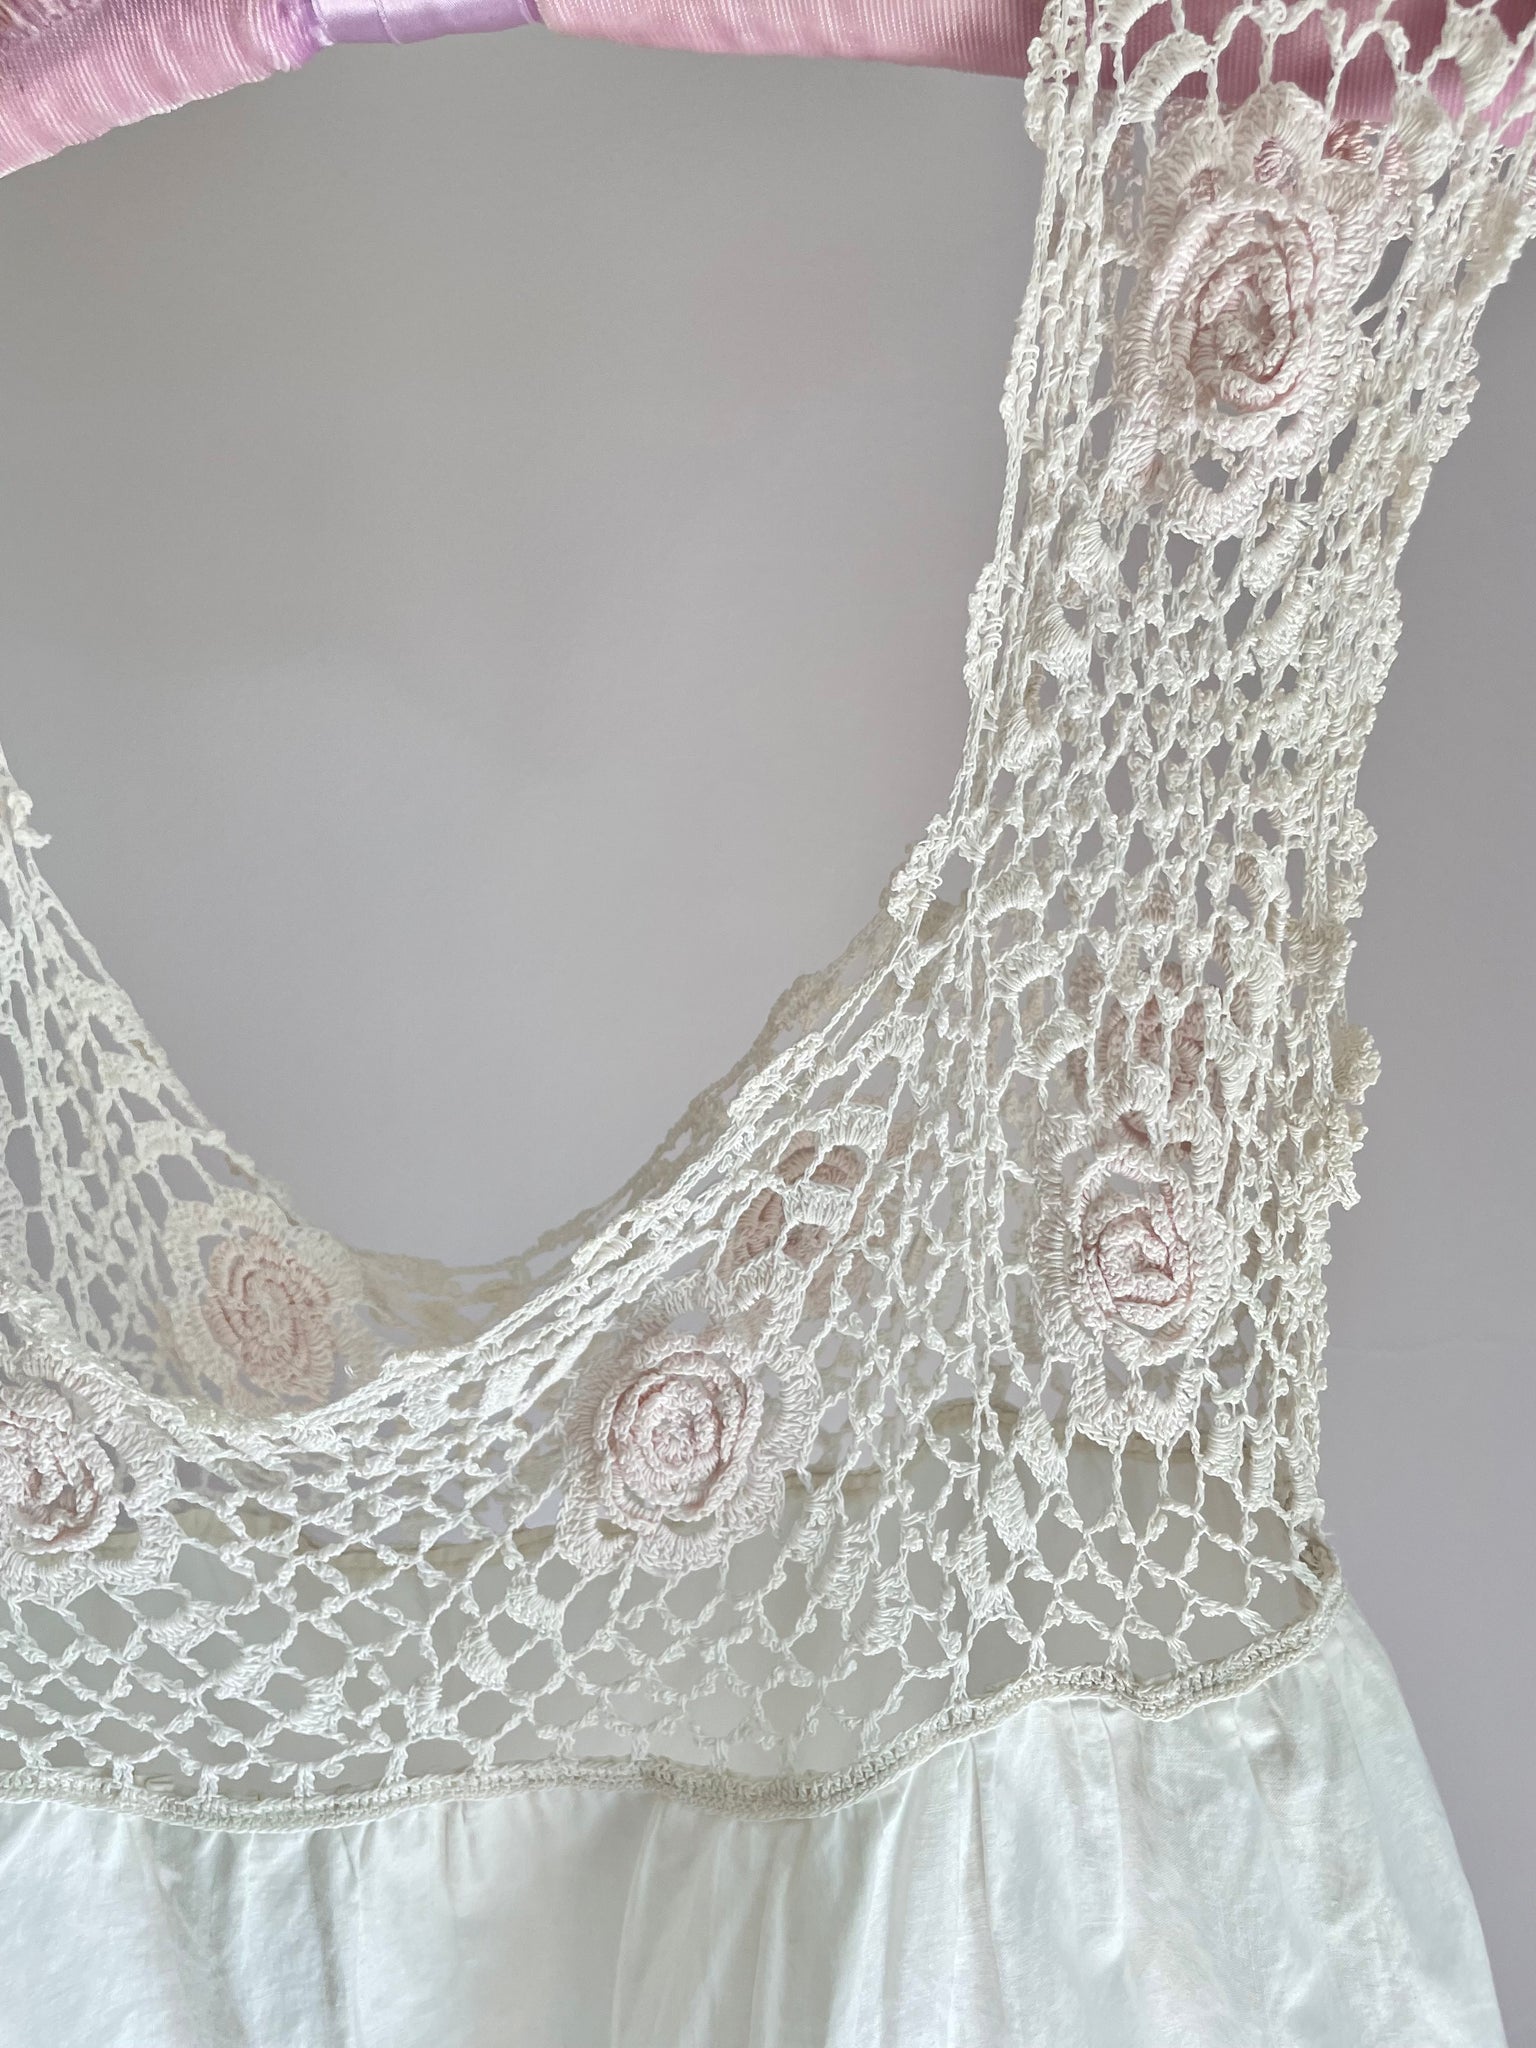 1910s Rose Floral Crochet White Cotton Top Corset Cover